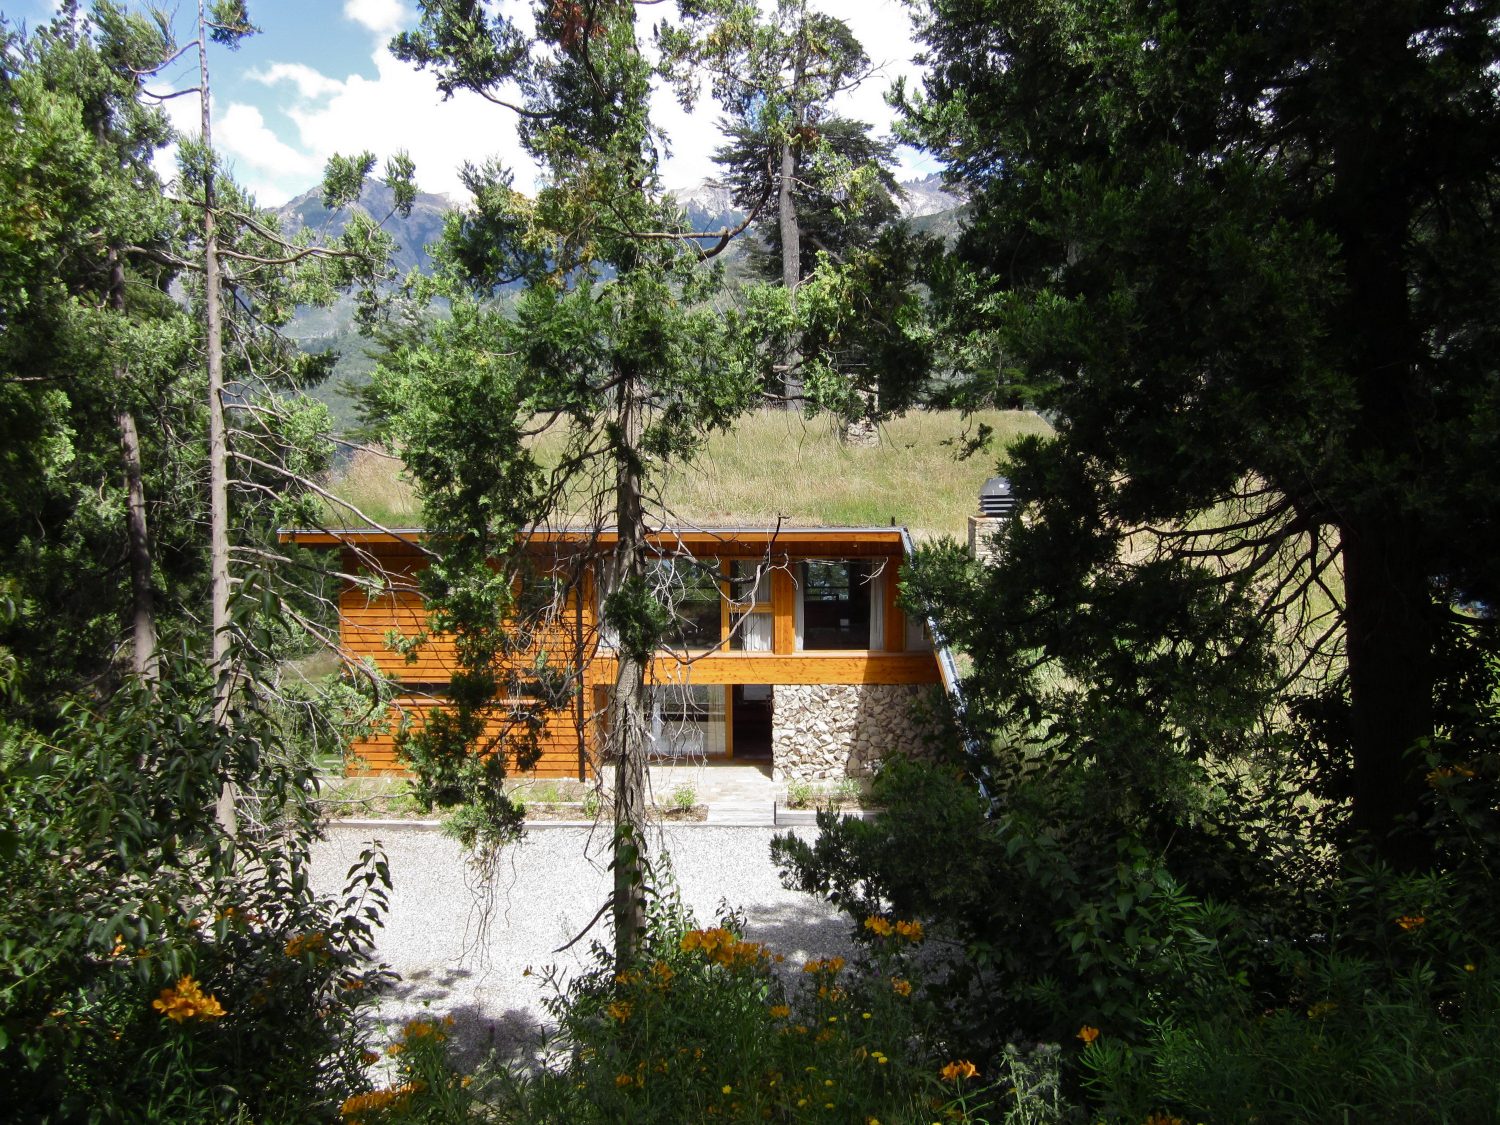 House in Patagonia by Estudio Ramos